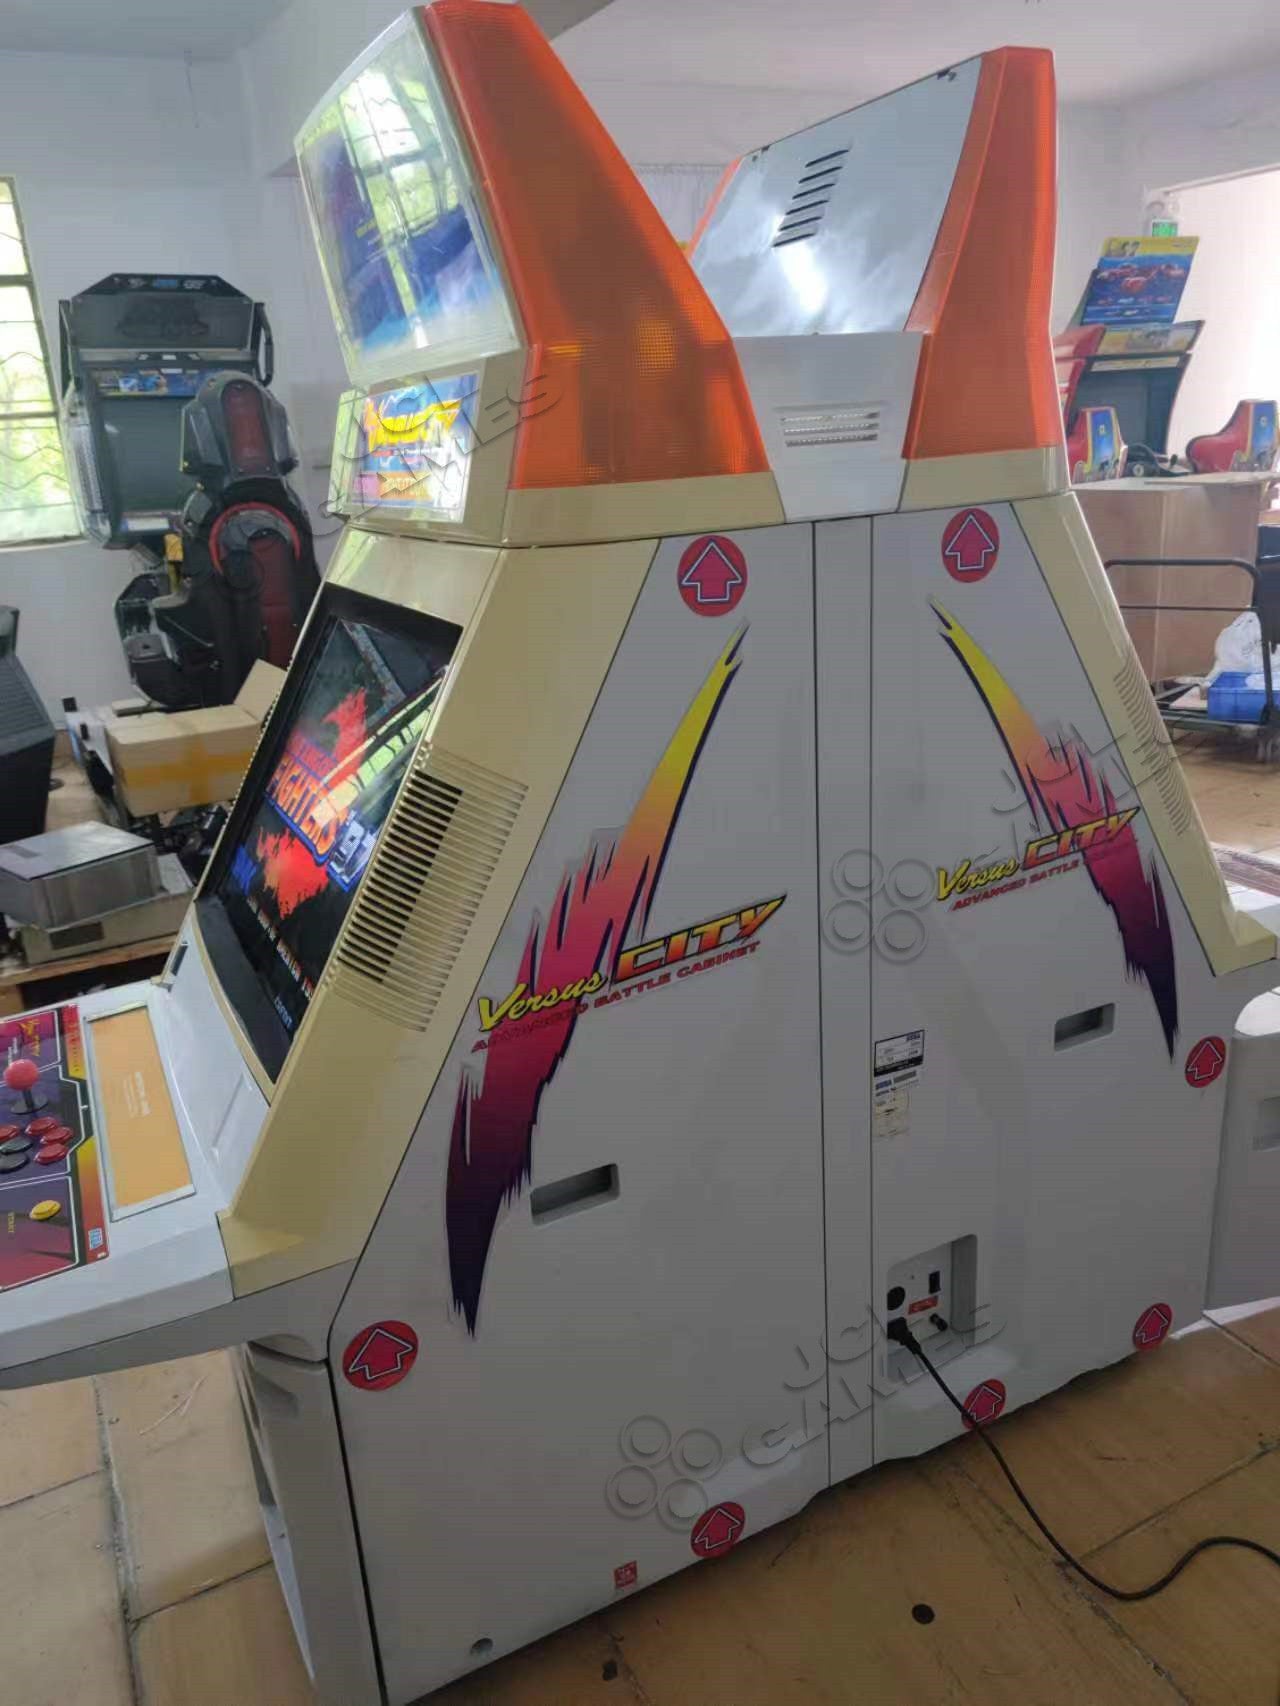 Japan candy new versus city sega arcade game007 jcl games